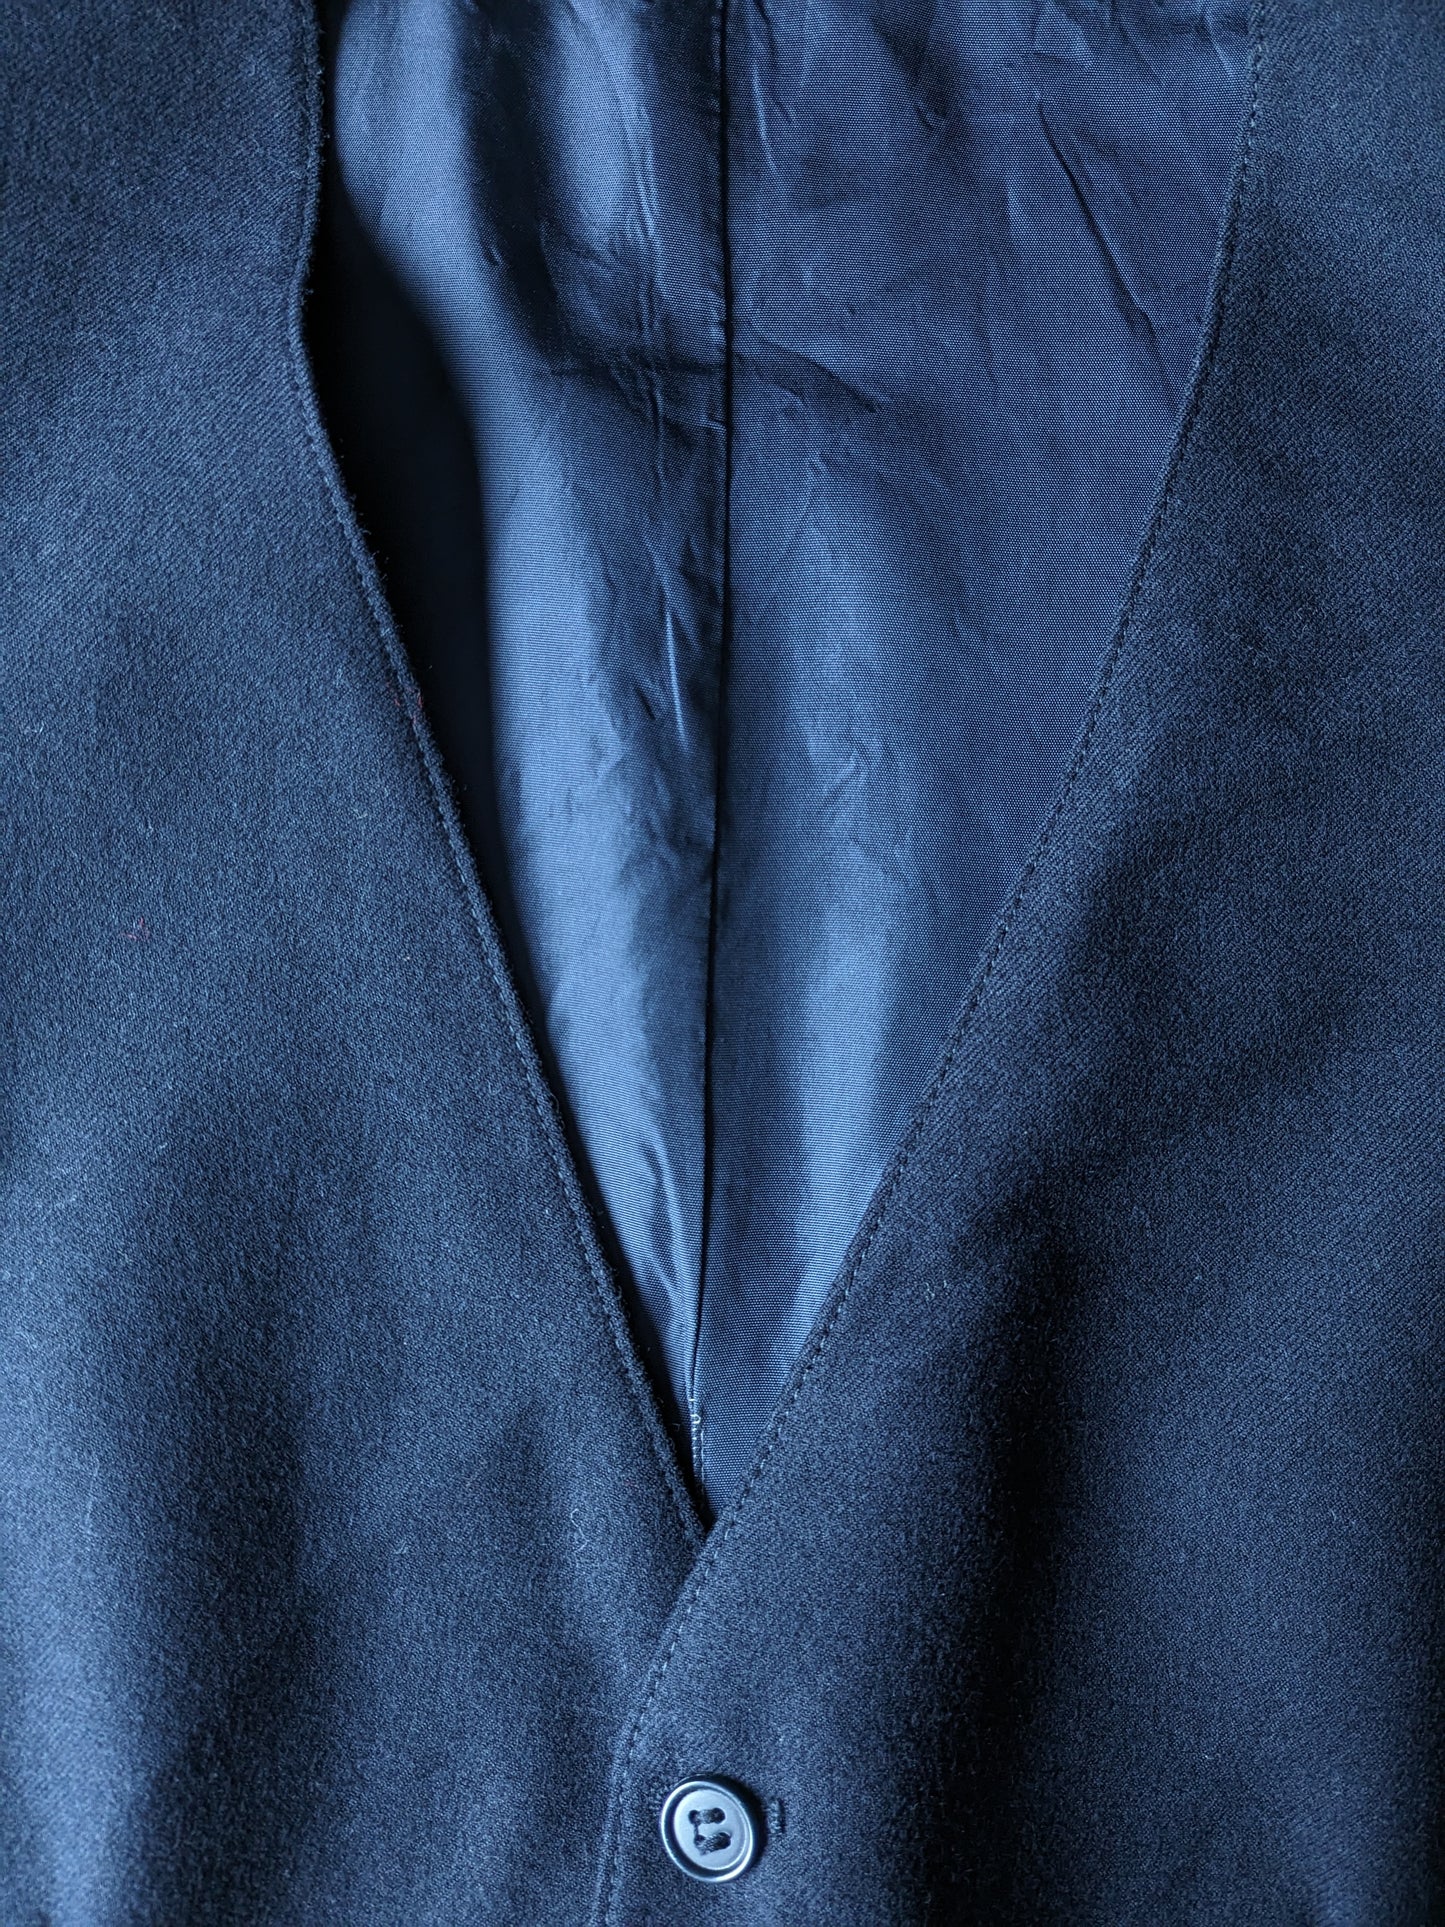 Woolen waistcoat. Dark blue colored. Size S. #328.